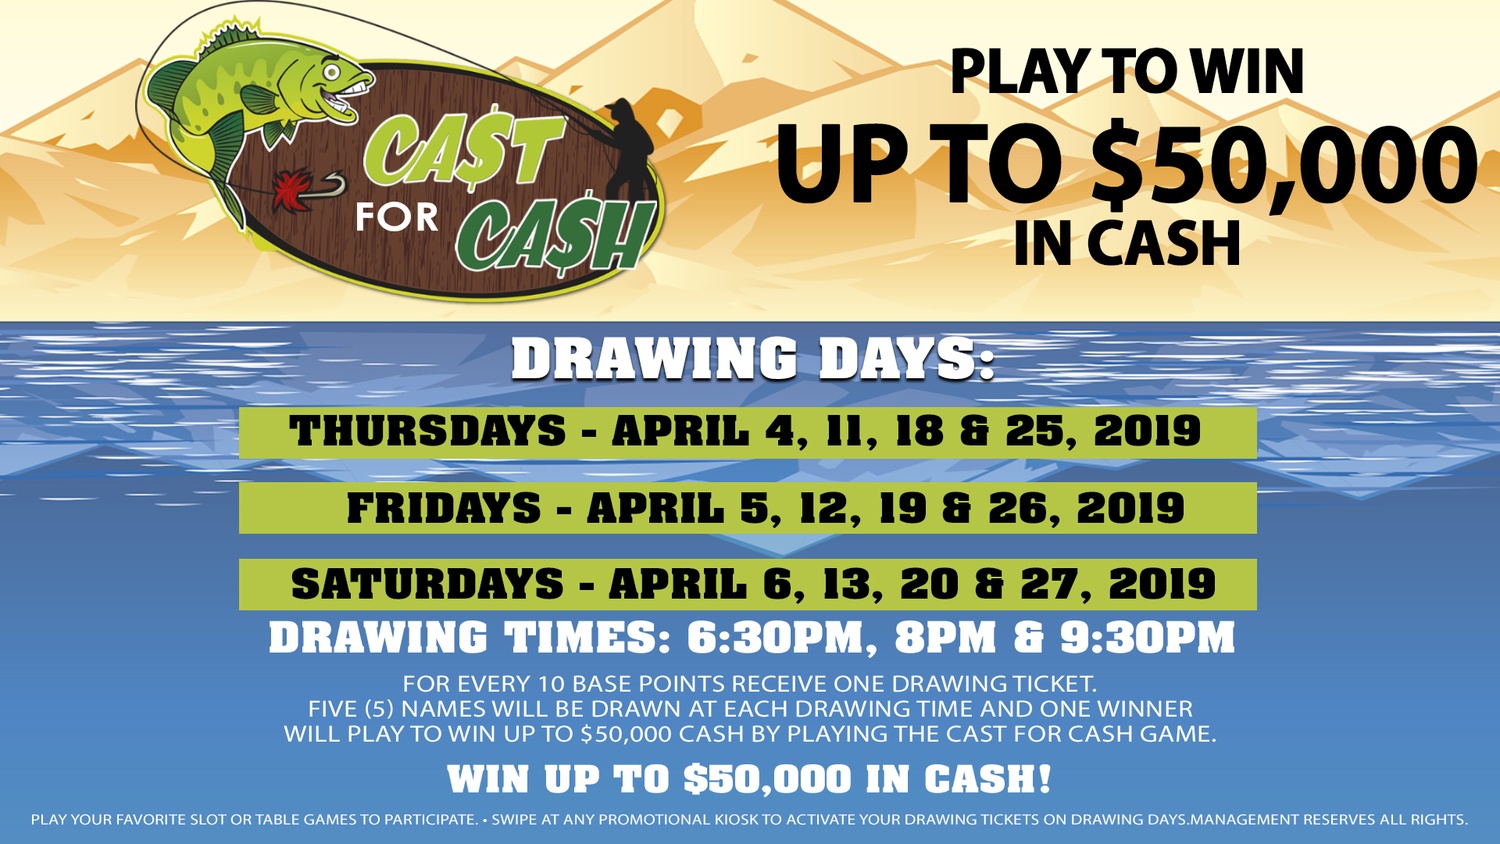 Cash for cash drawing $50,000 cash win Albuquerque